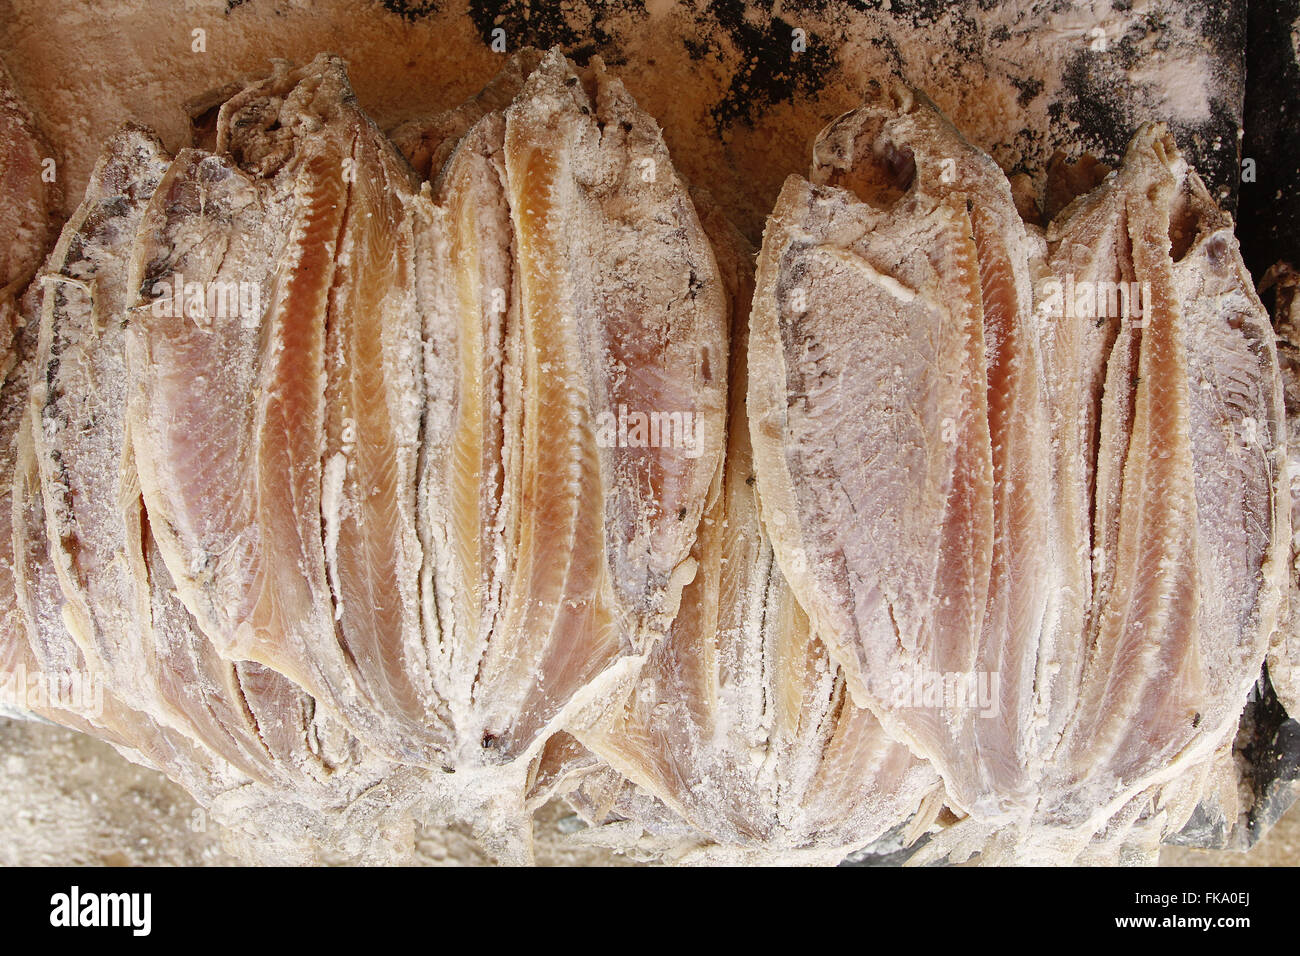 Curimbat·s - dried salted fish at fish market Stock Photo